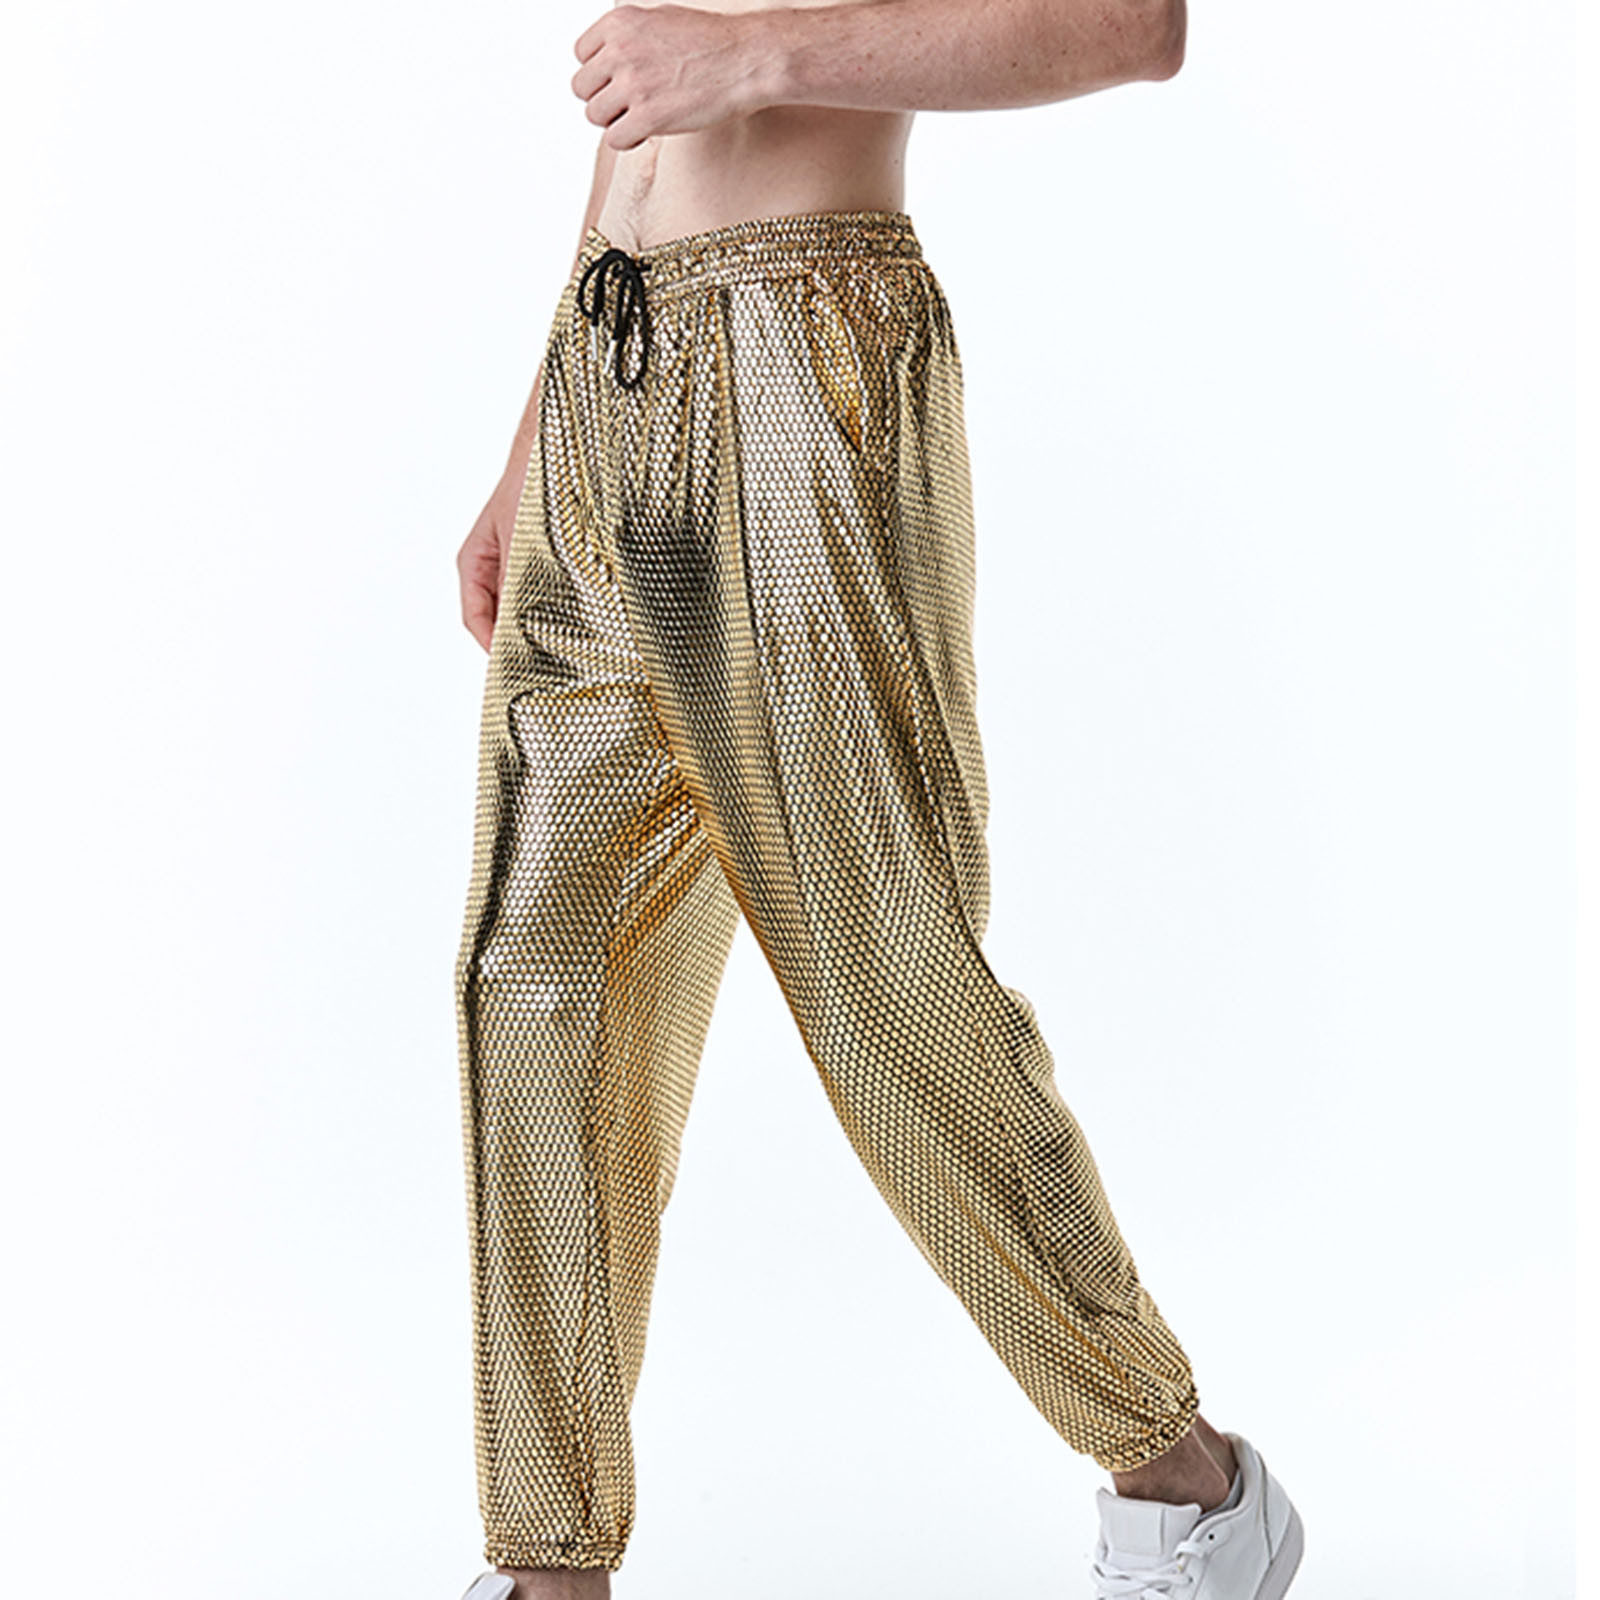 Jsaierl Reflective Pants Men Hip Hop Trousers Casual Gold Print Jogger Sweatpants Drawstring Sequin Shiny Trousers, Men's, Size: Small